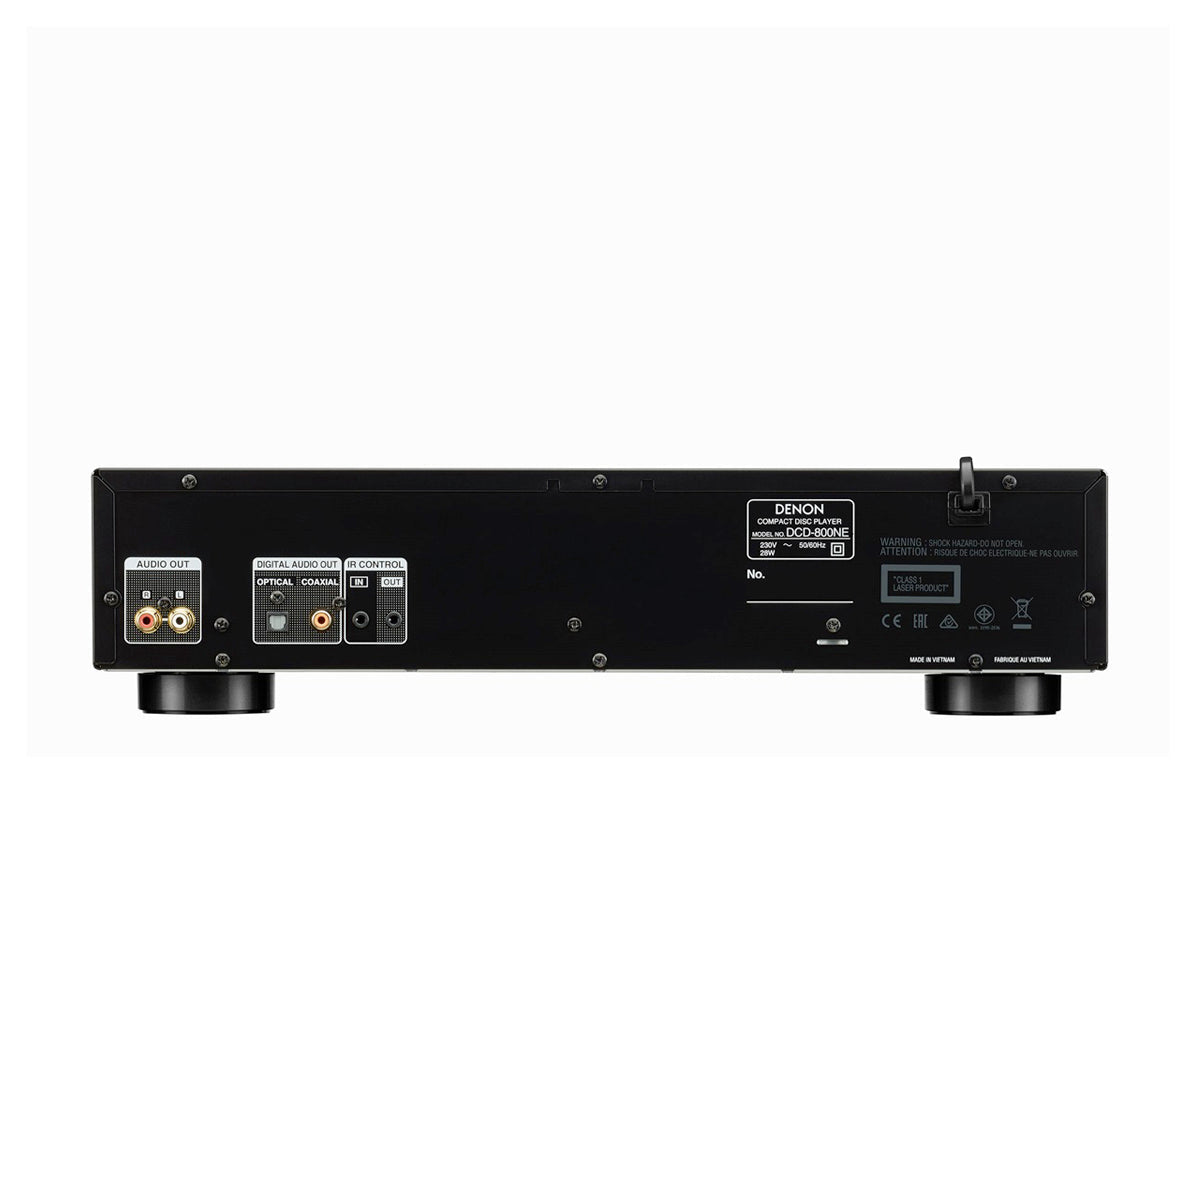 Denon DCD-900NE CD Player - The Audio Experts